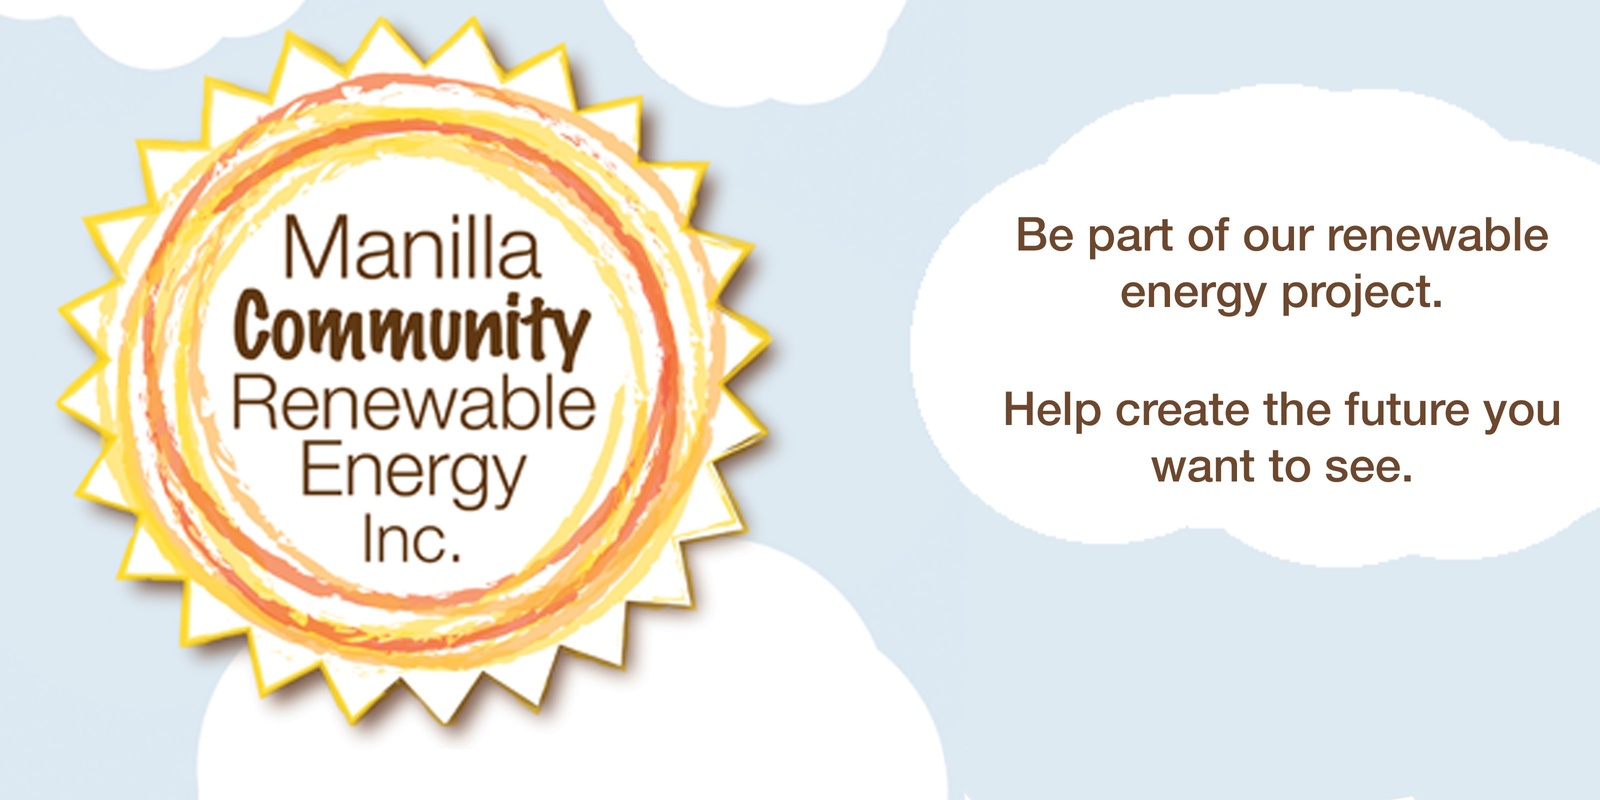 Manilla Community Renewable Energy Inc. 's banner